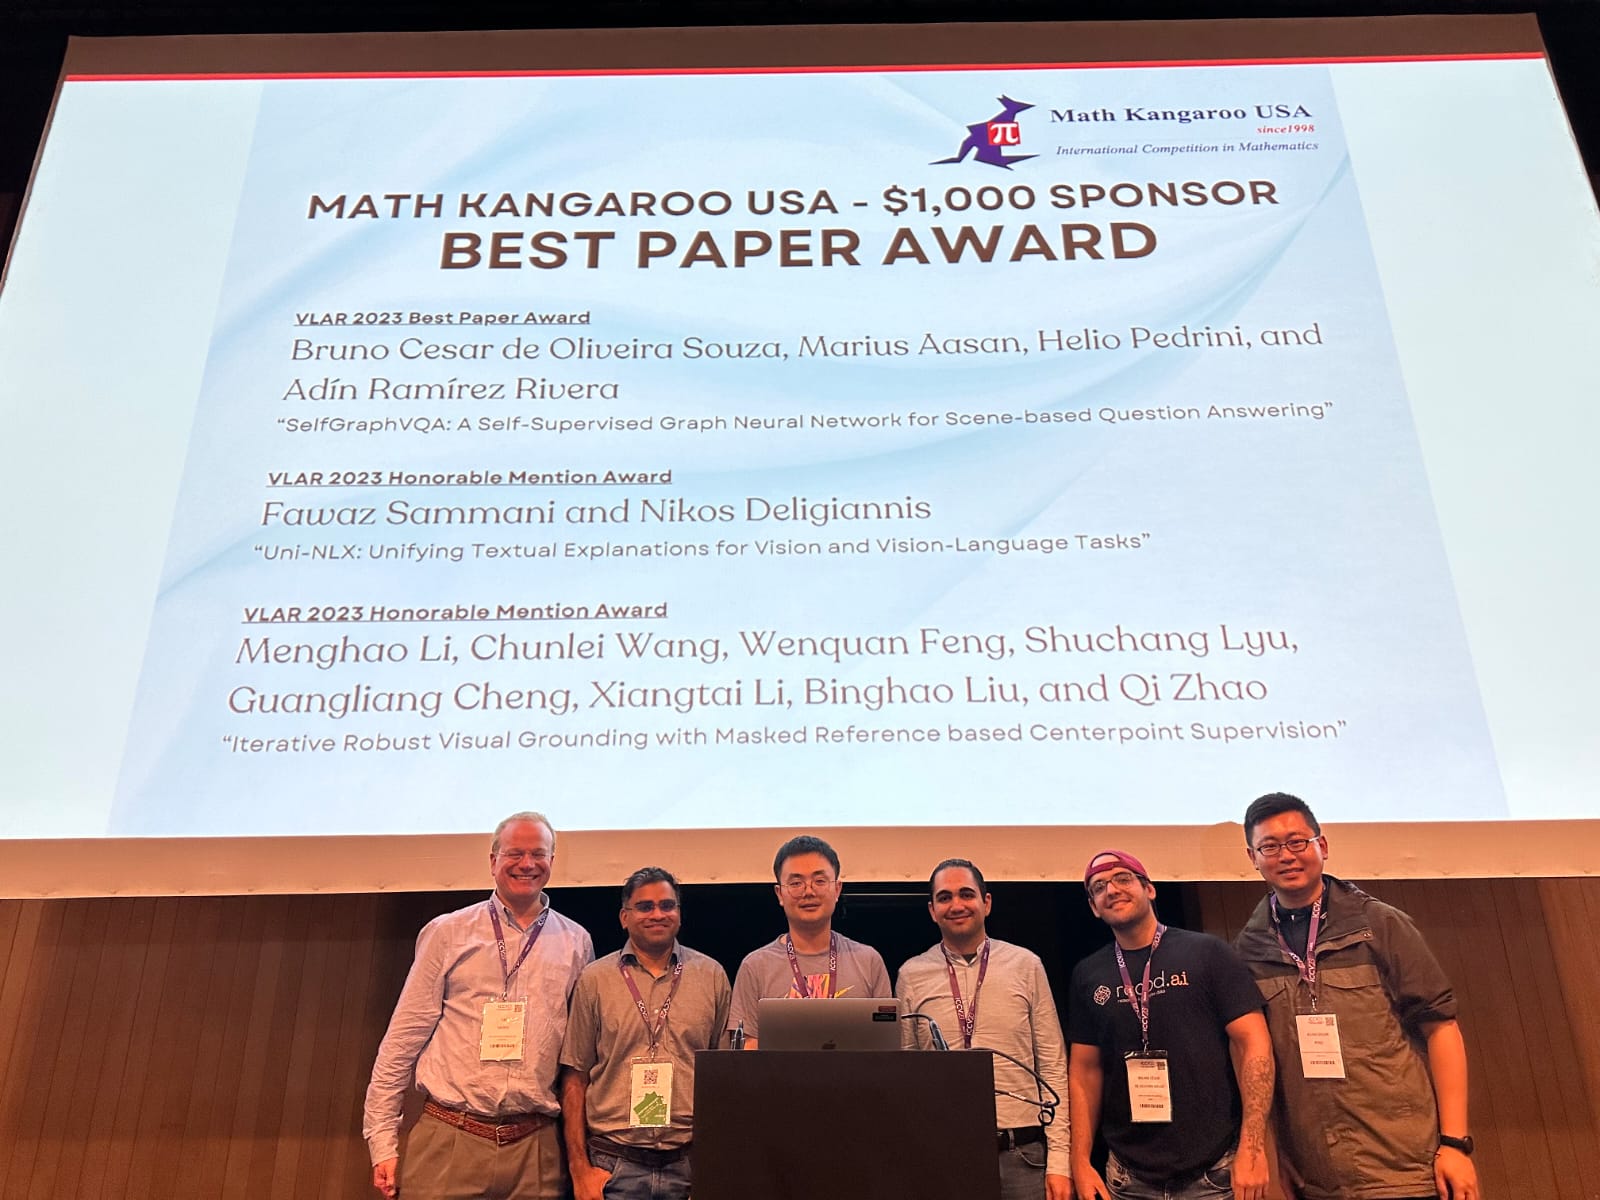 Best paper award at VLAR ICCV 2023 Department of Informatics